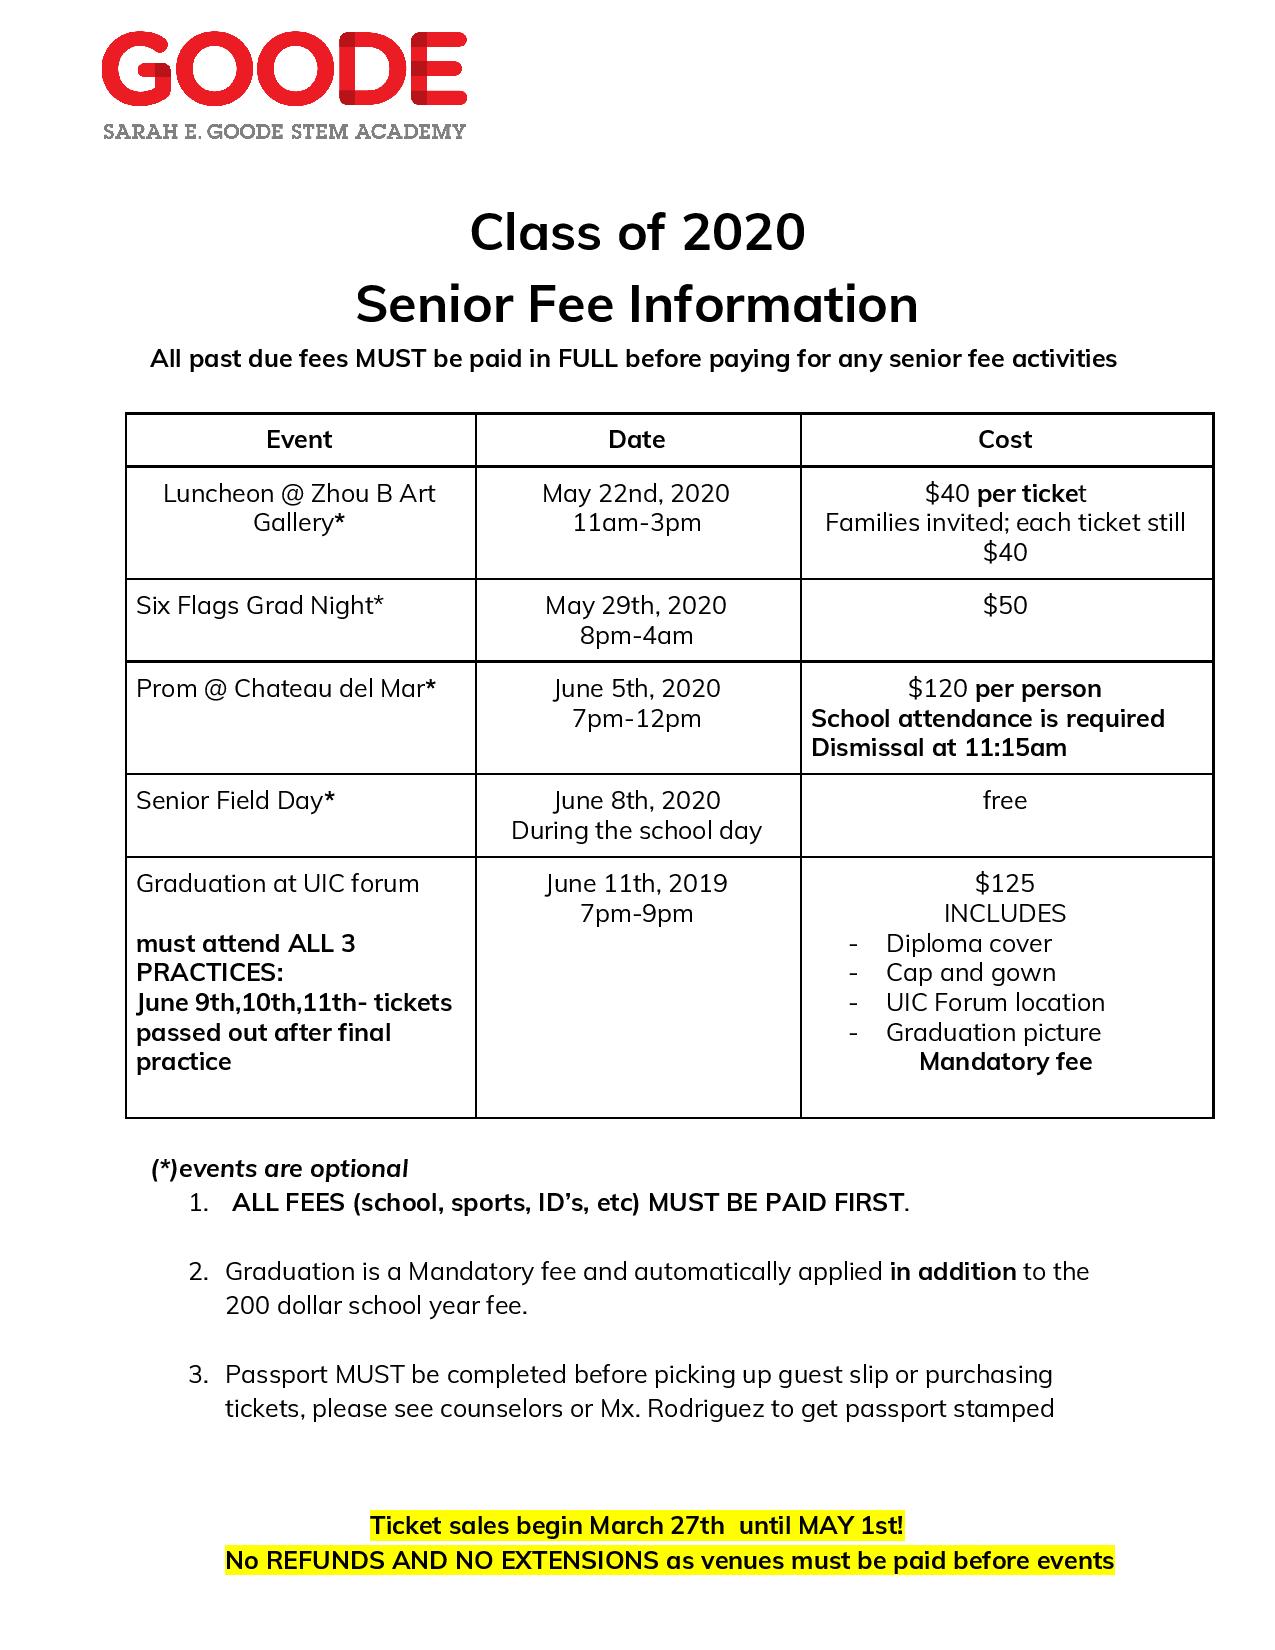 Class of 2020 Senior Fee Information